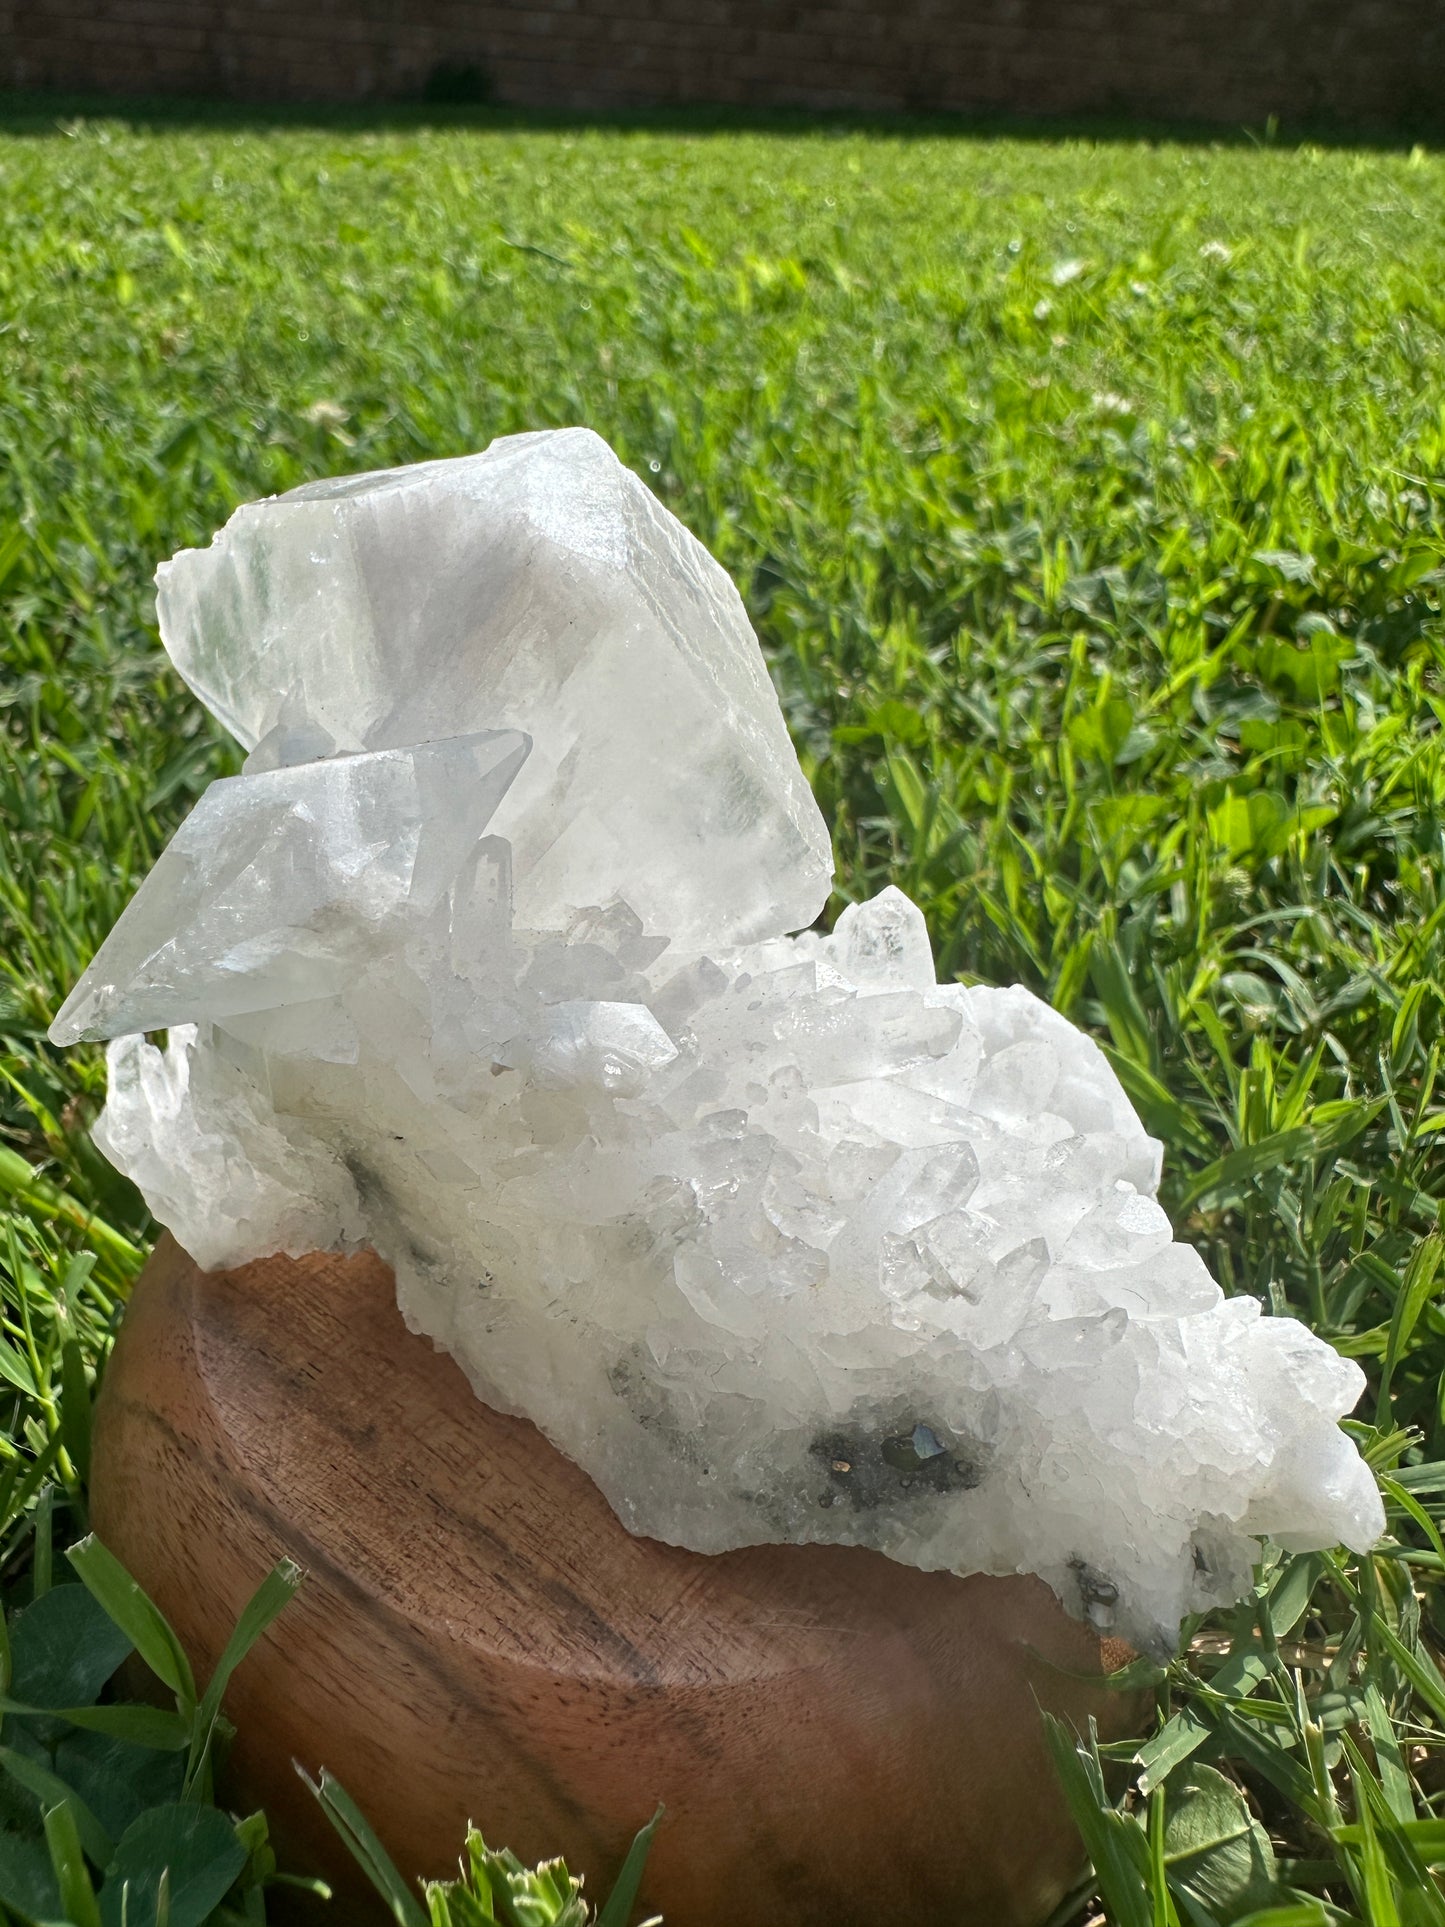 Scalenohedral calcite, “dogtooth” calcite, stellar beam calcite, with quartz points